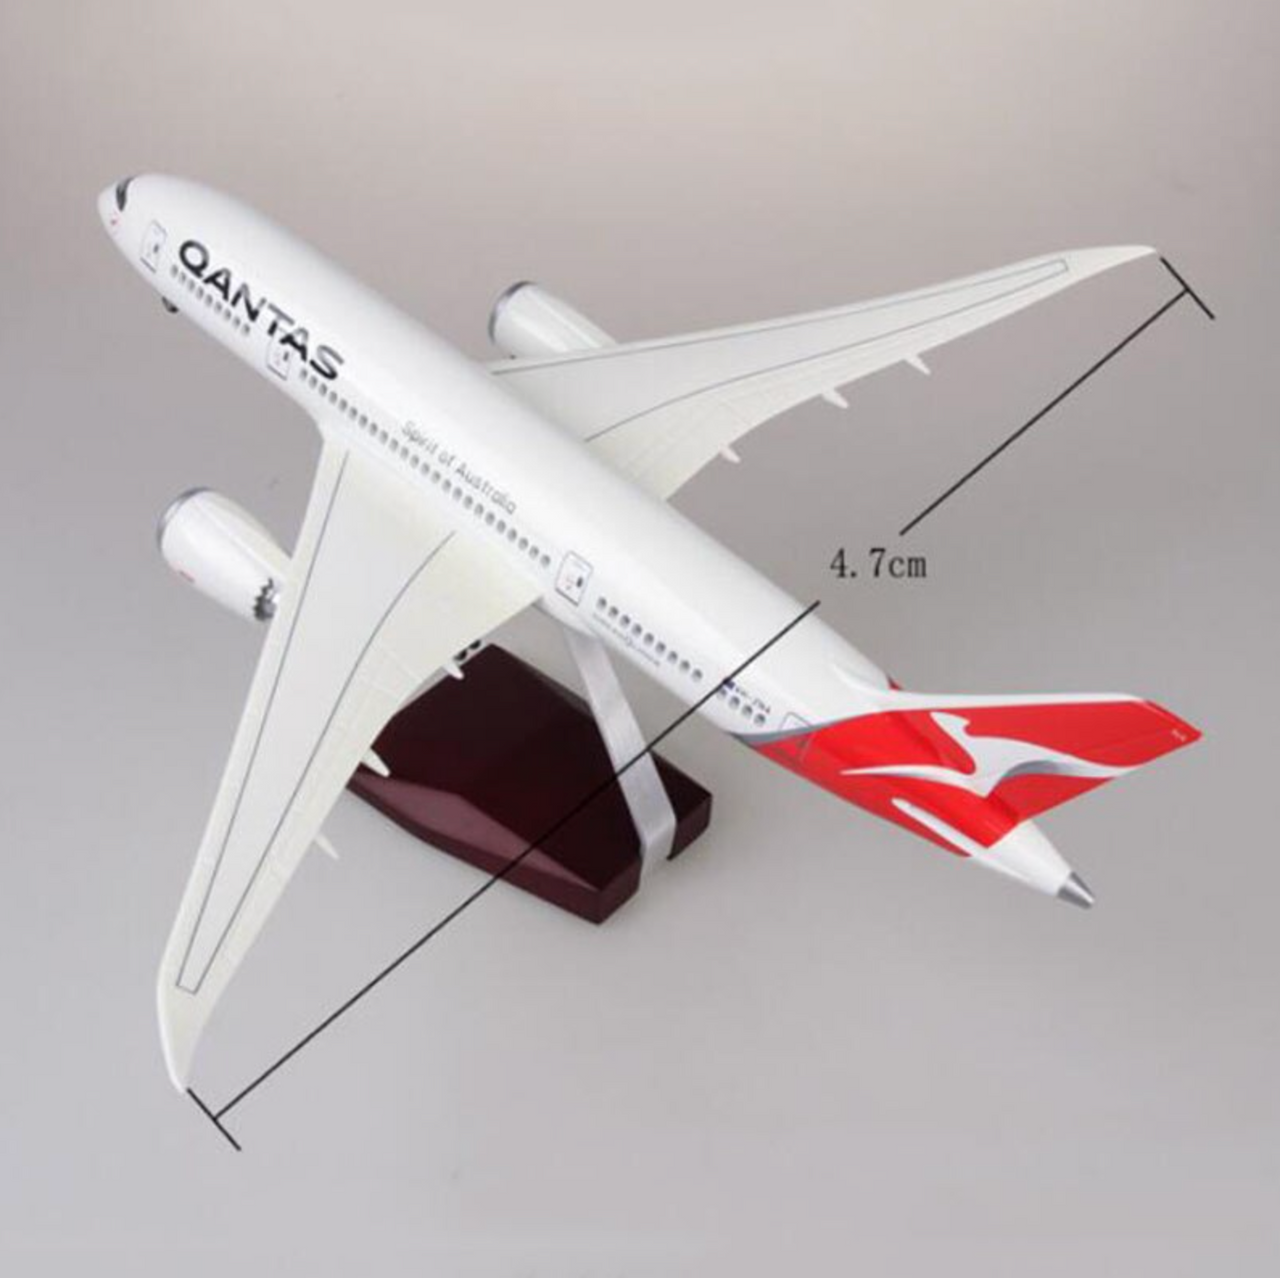 Qantas Boeing 787 Airplane Model (1/130 Scale)